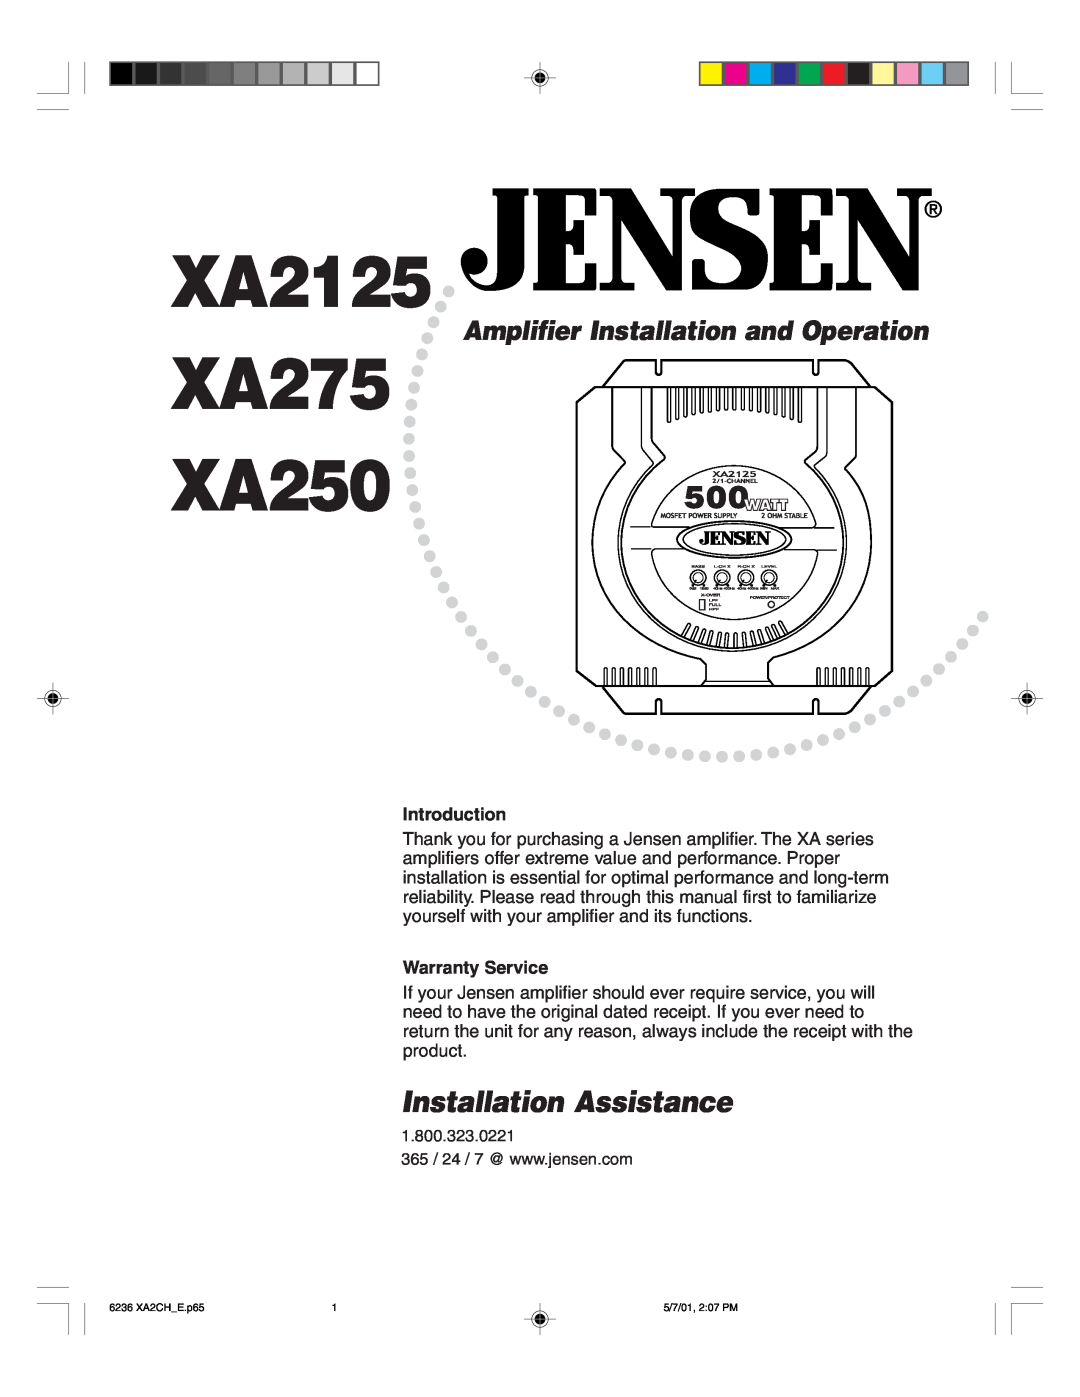 Jensen Tools warranty Installation Assistance, Introduction, Warranty Service, XA2125, XA275 XA250 